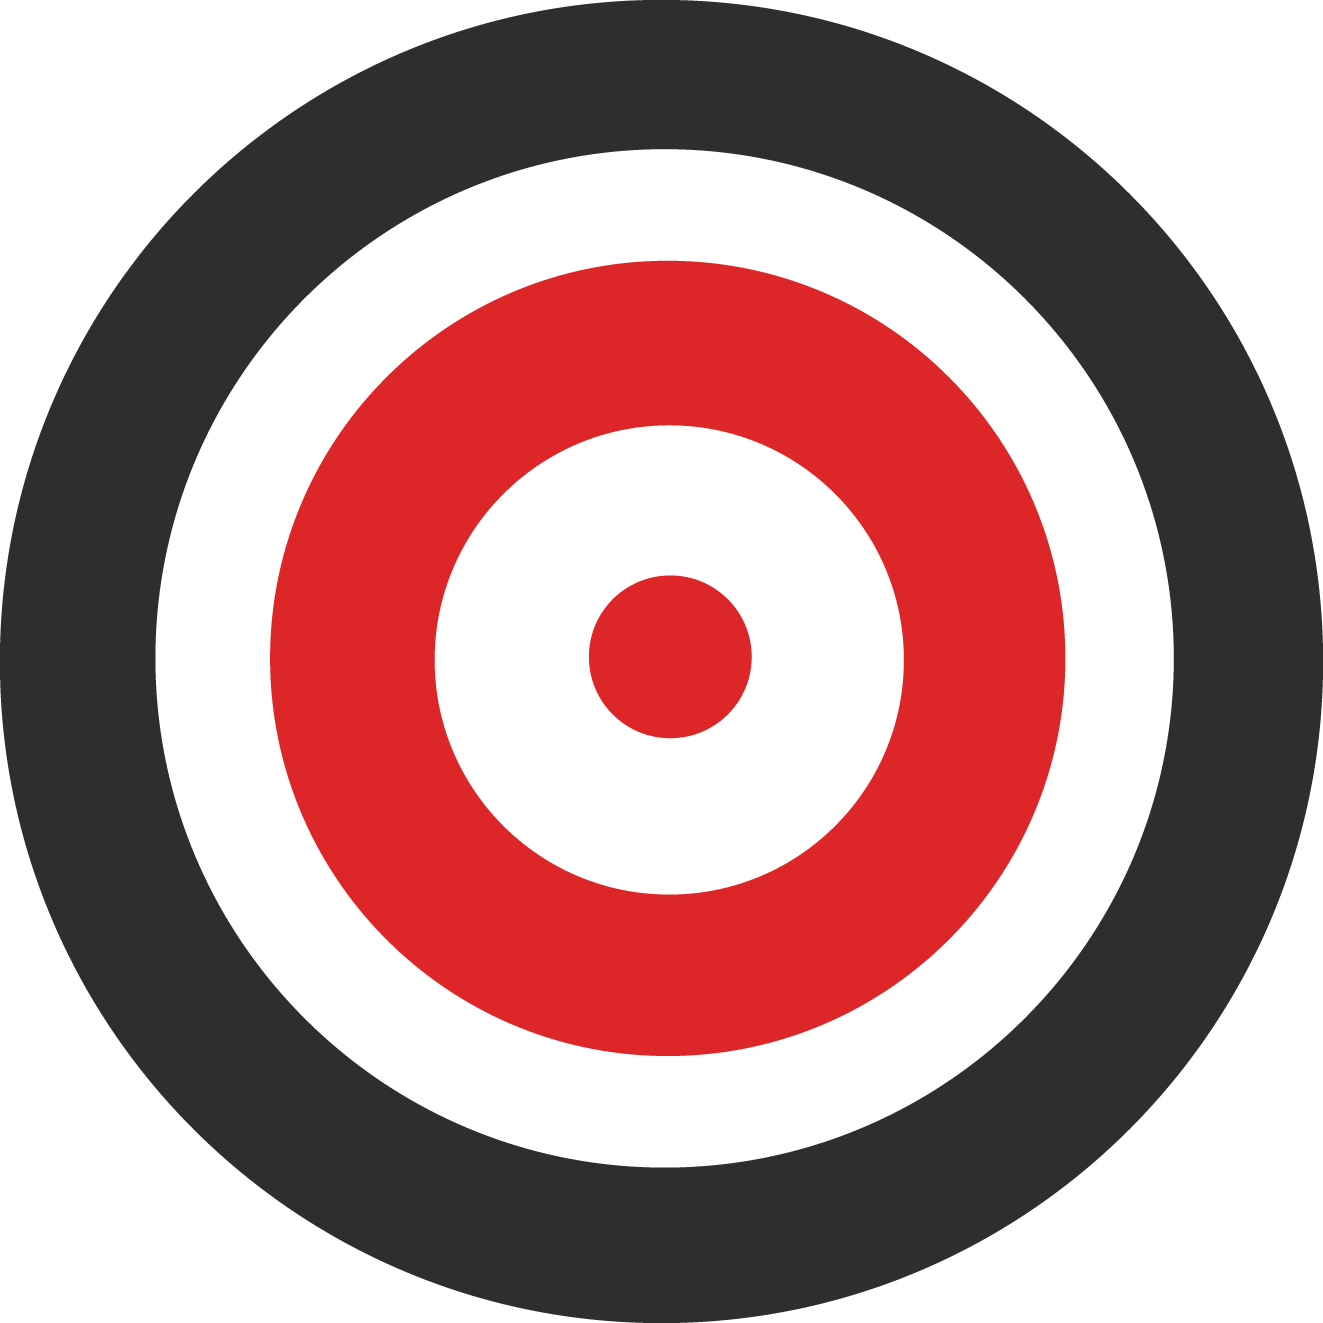 Target PNG